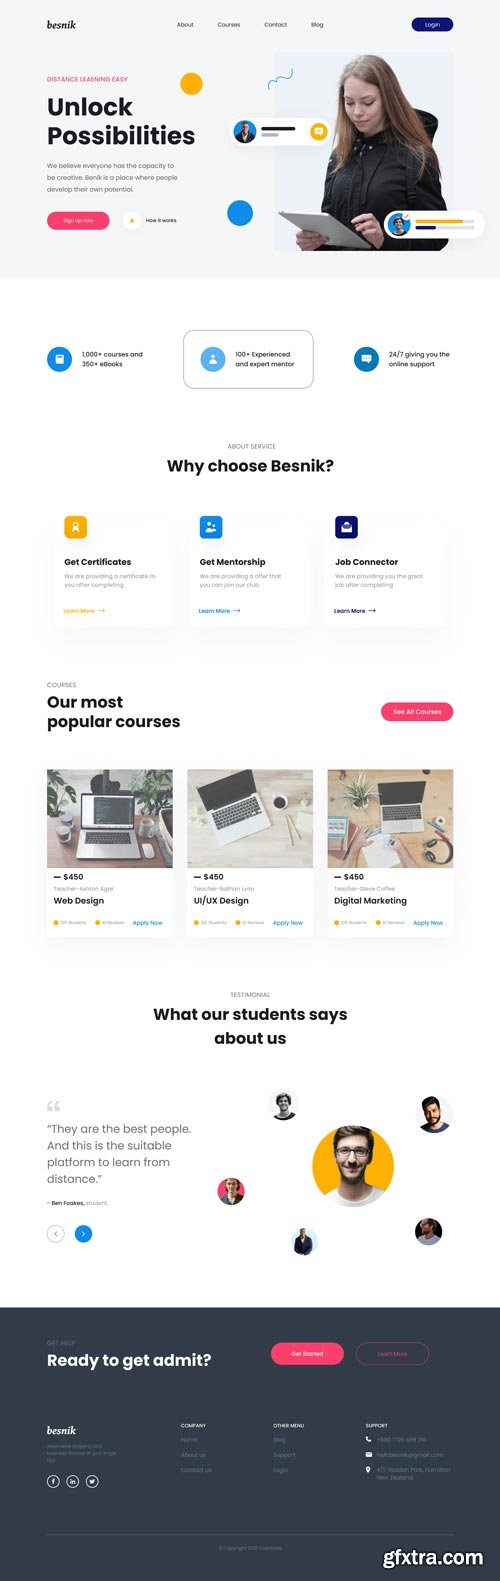 UiHut - Online Education Landing Page - 8093